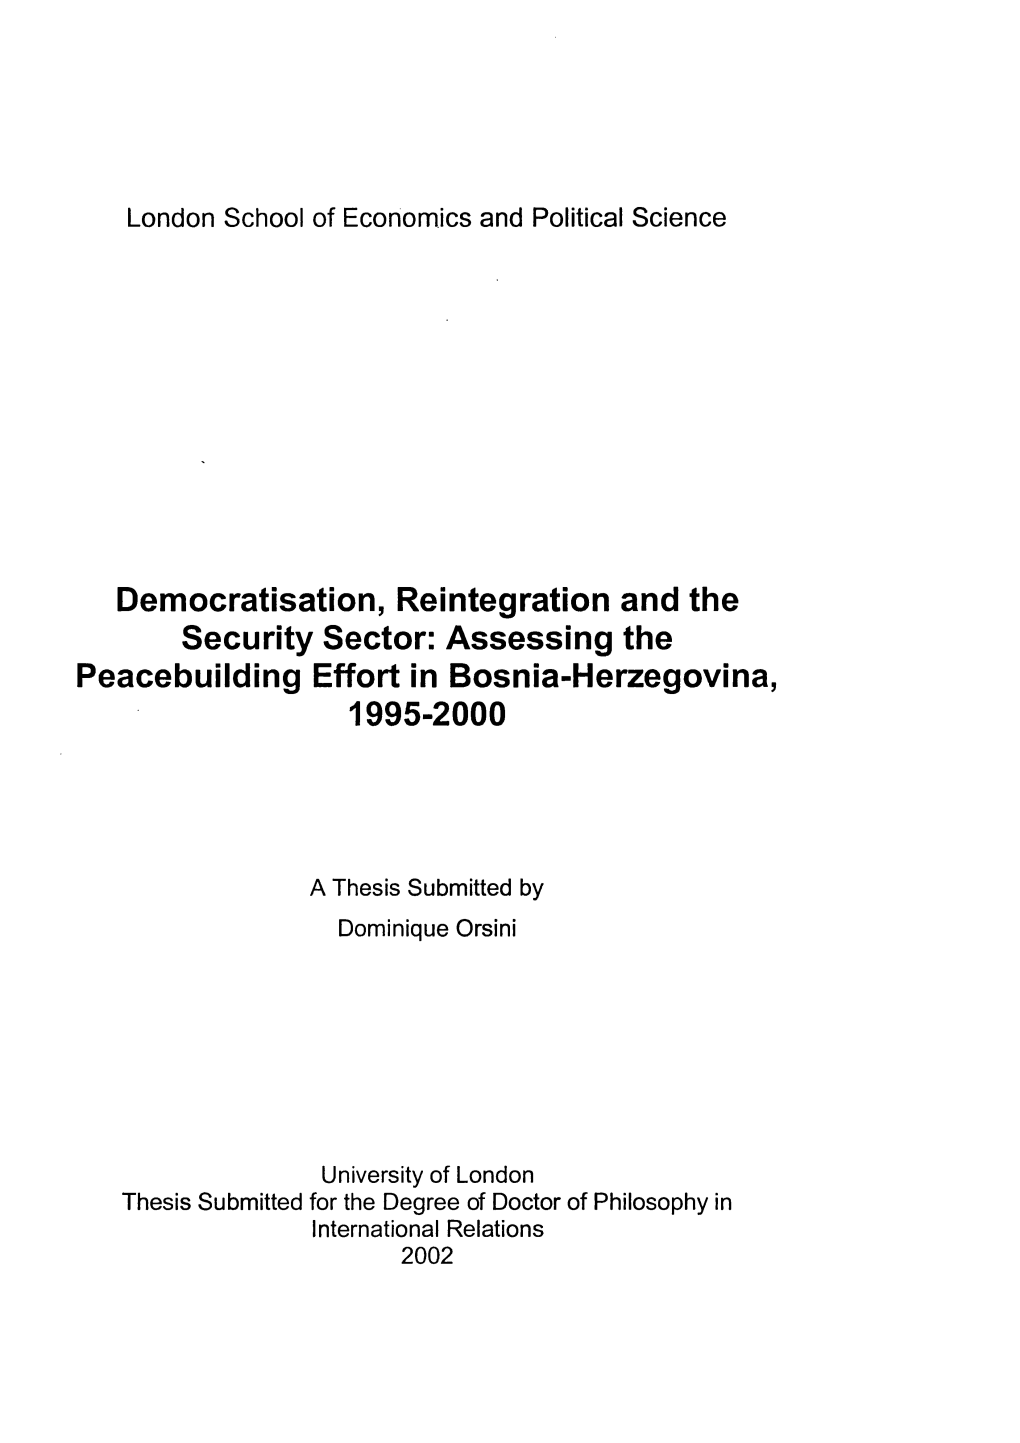 Democratisation, Reintegration and the Security Sector: Assessing the Peacebuilding Effort in Bosnia-Herzegovina, 1995-2000